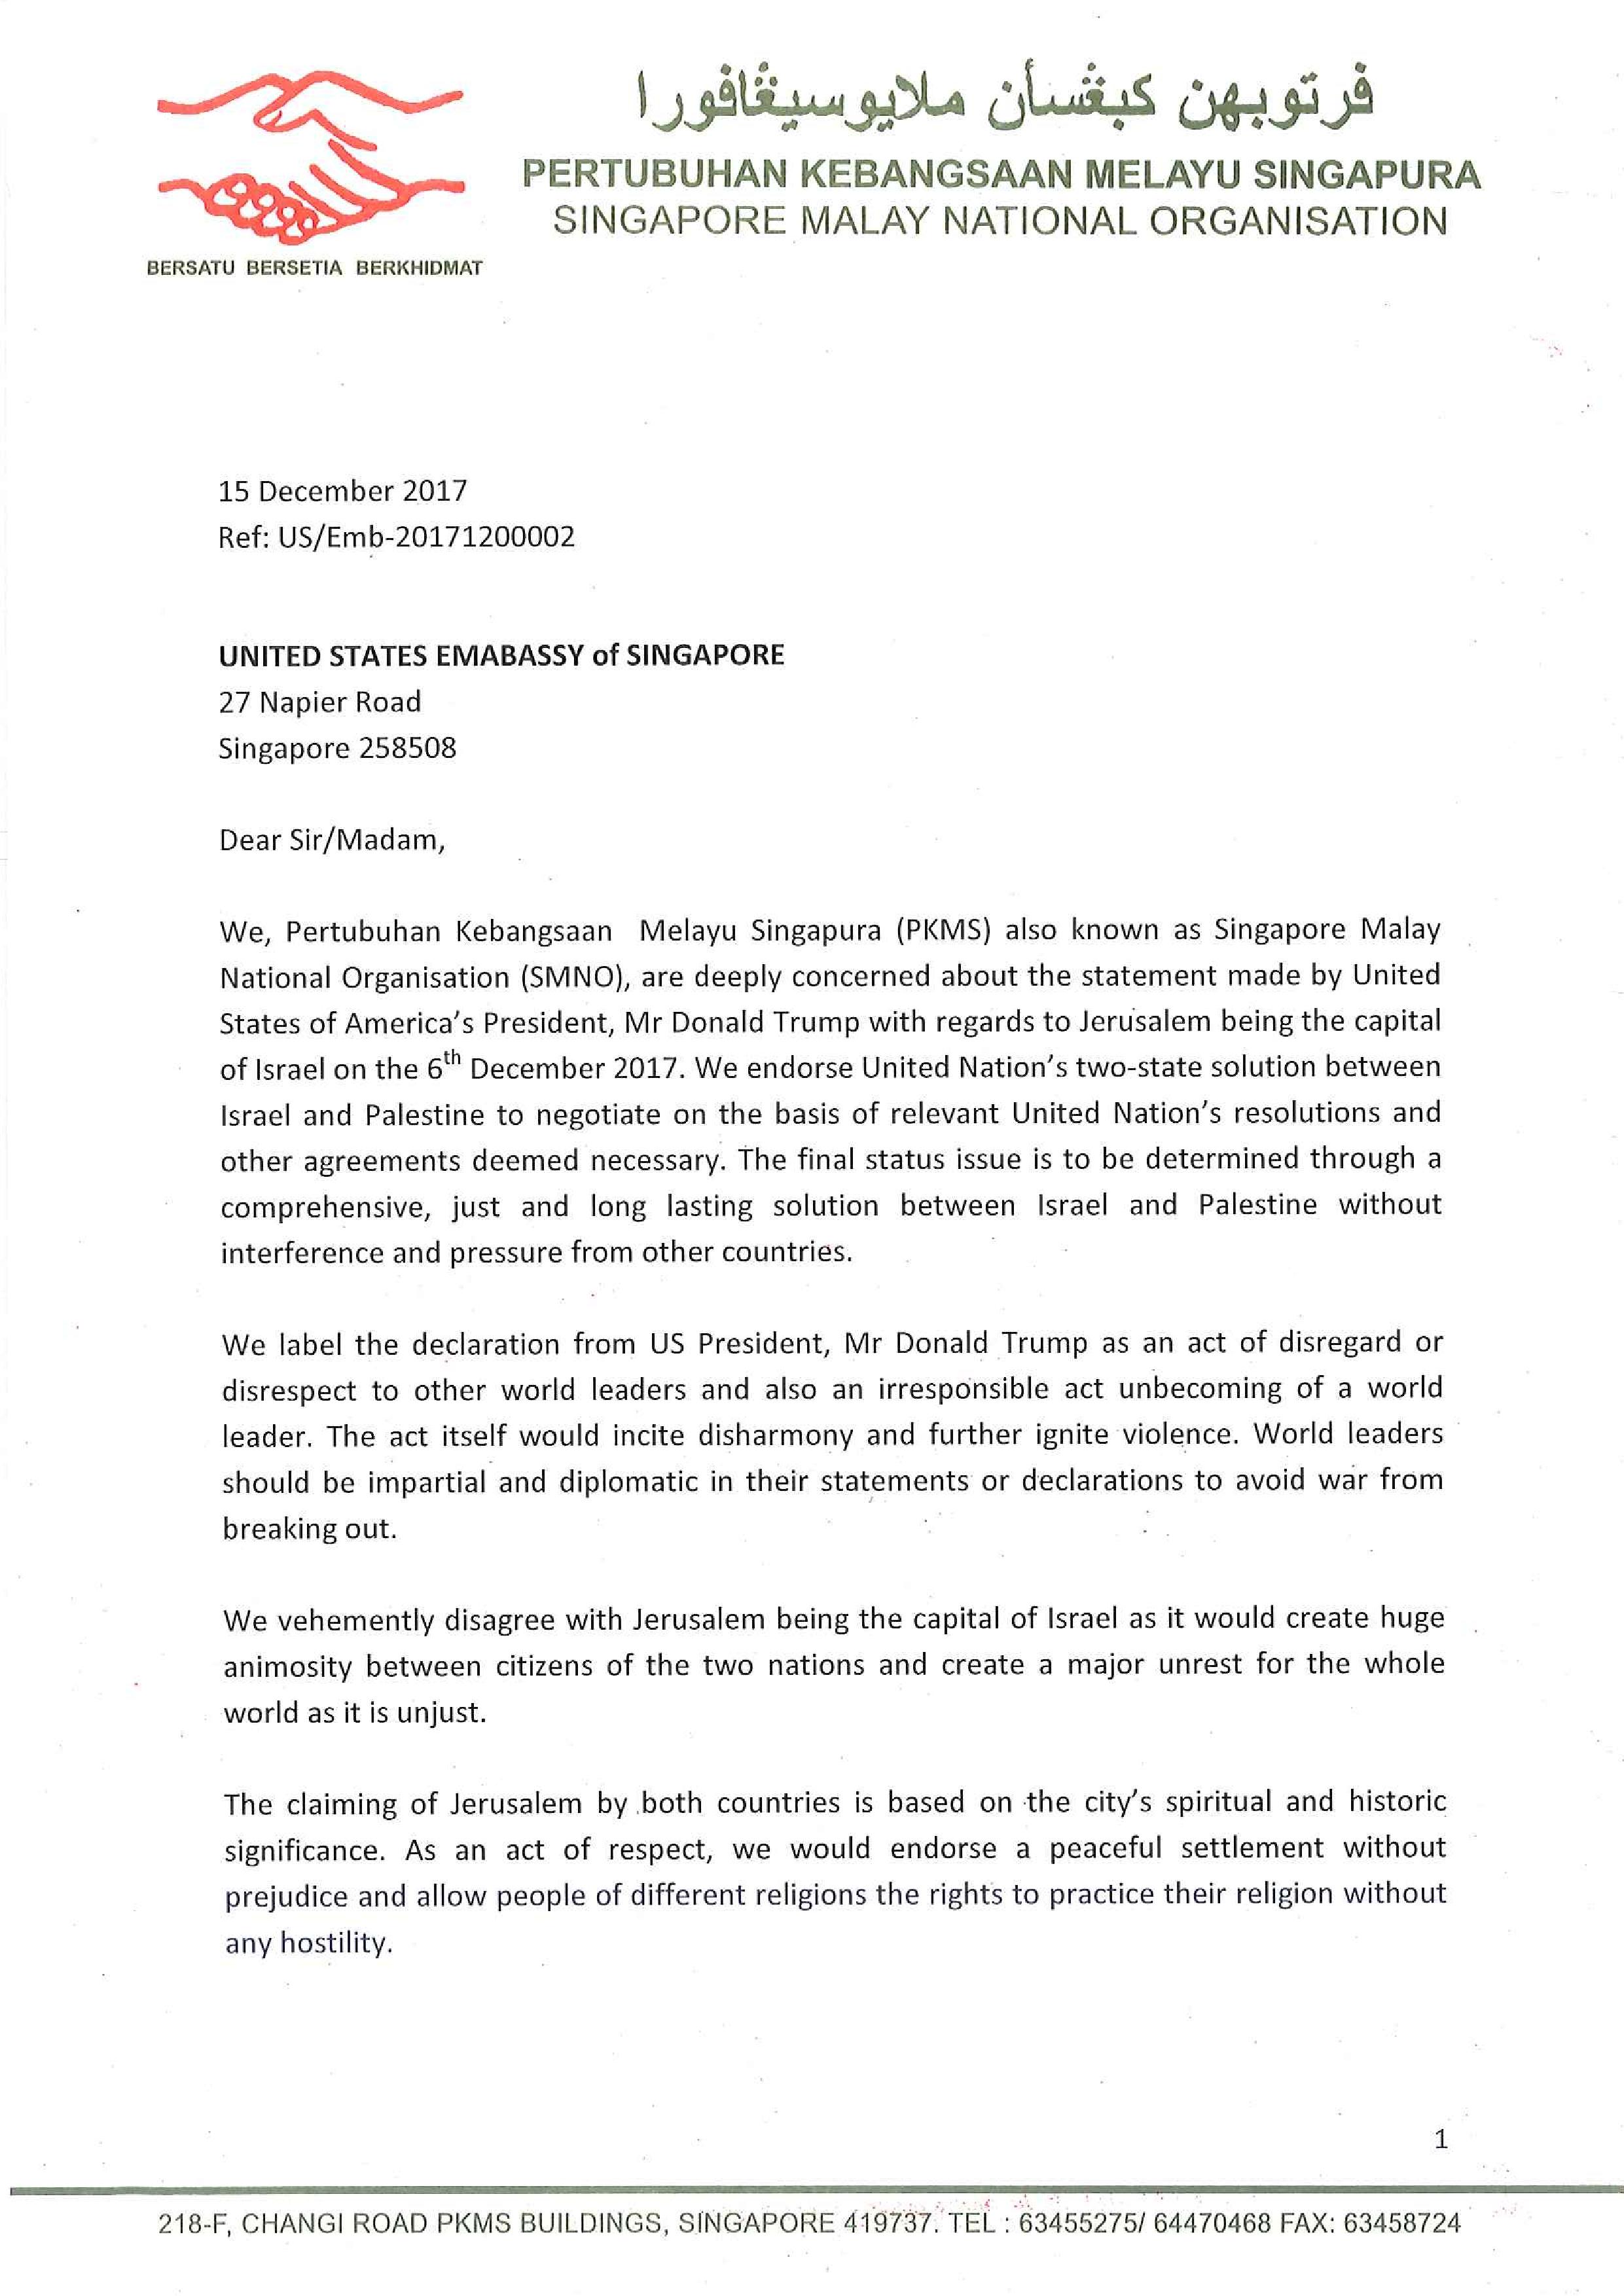 sample of cover letter for embassy